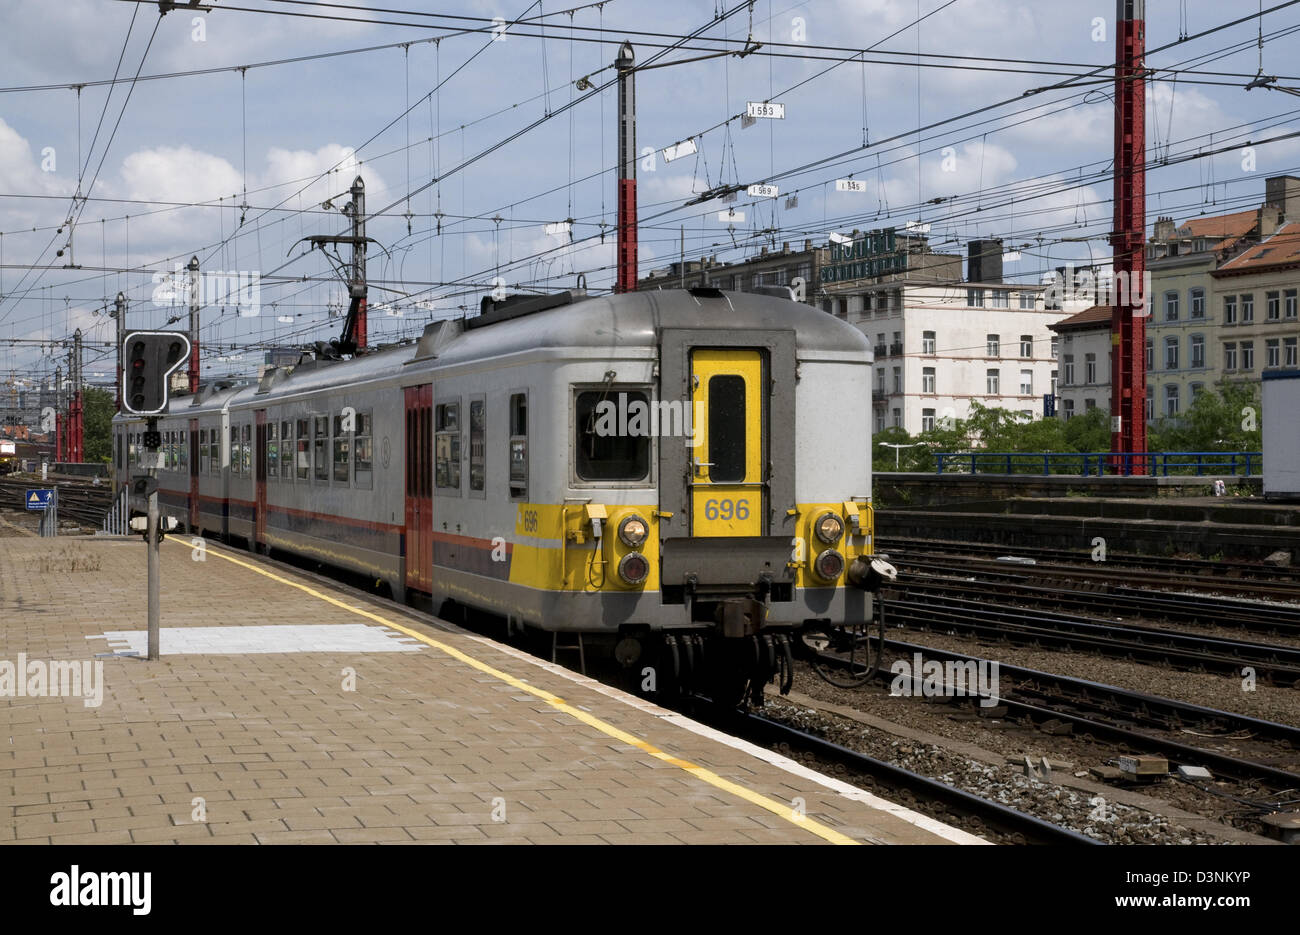 sncb,electric multiple unit train set,AM73,2-car,696,brussel zuid,belgium Stock Photo